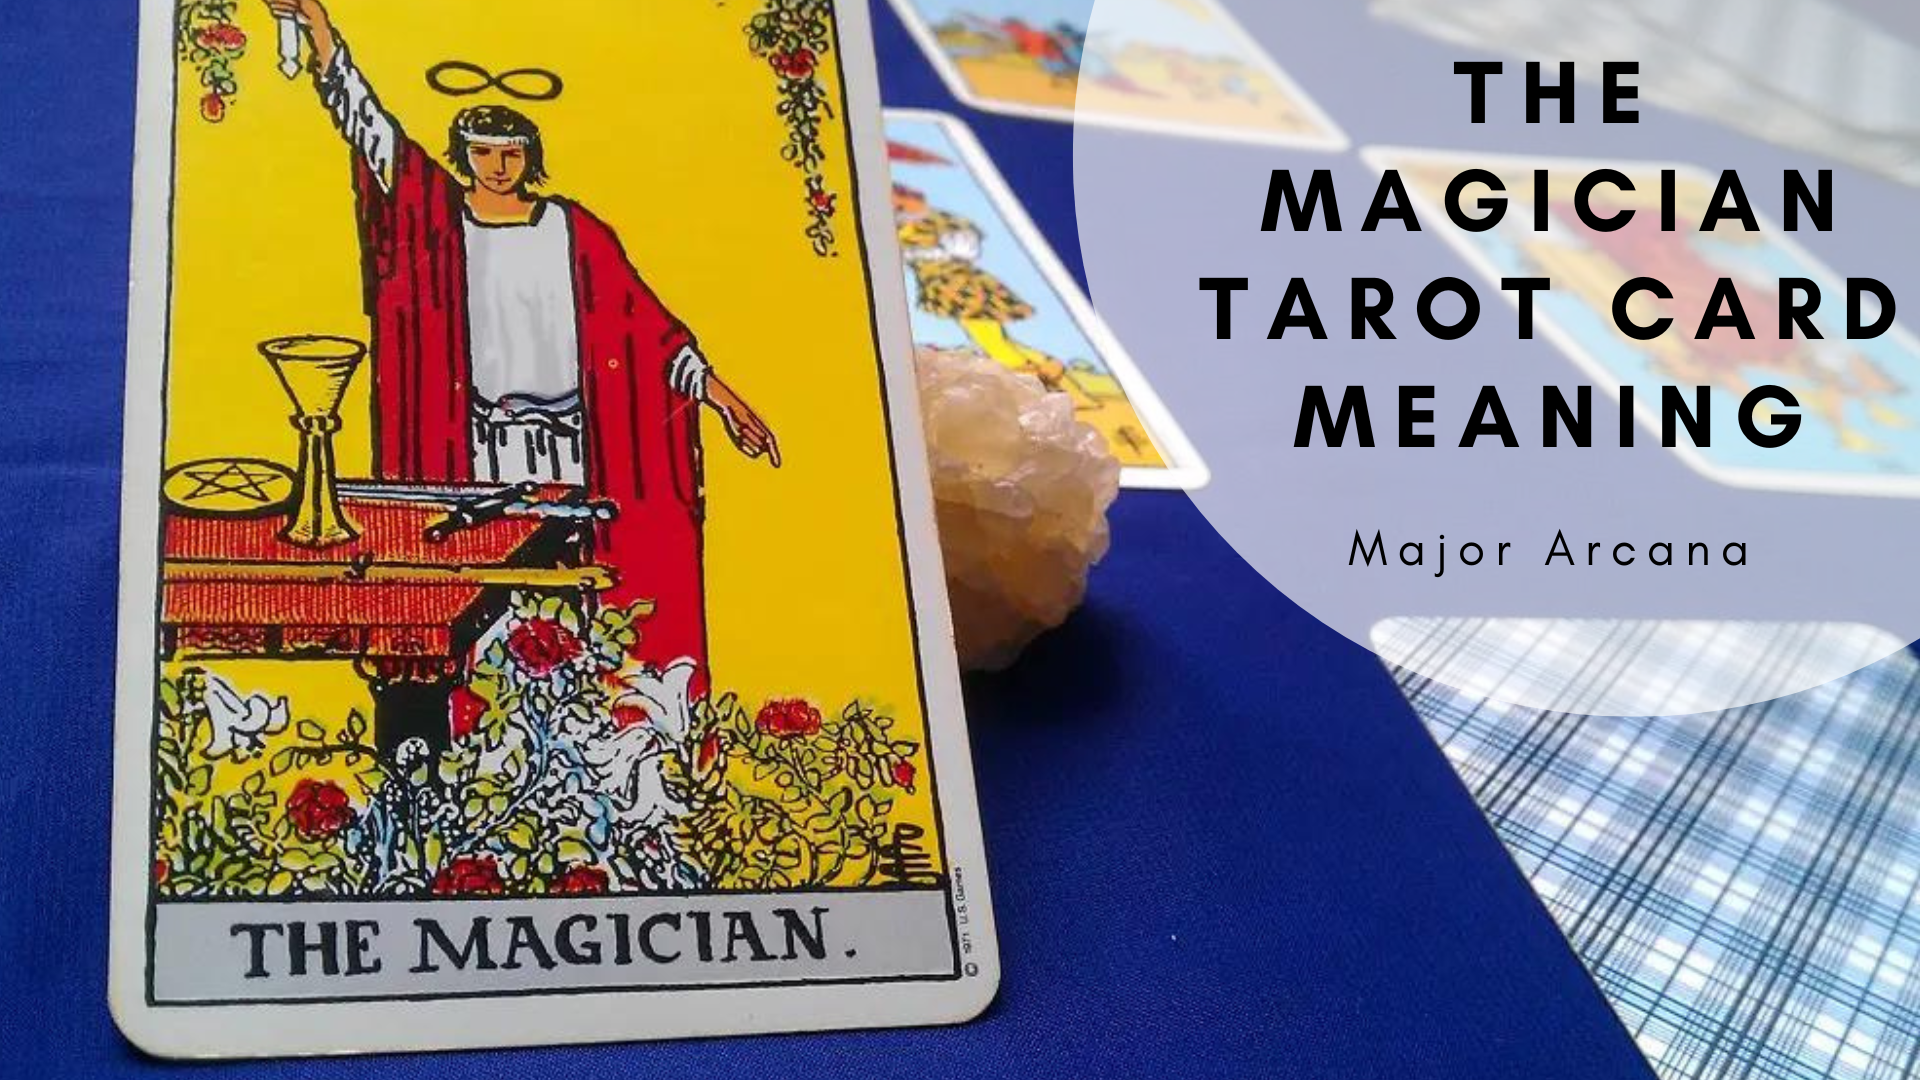 The Magician Tarot Card Meaning - Major Arcana